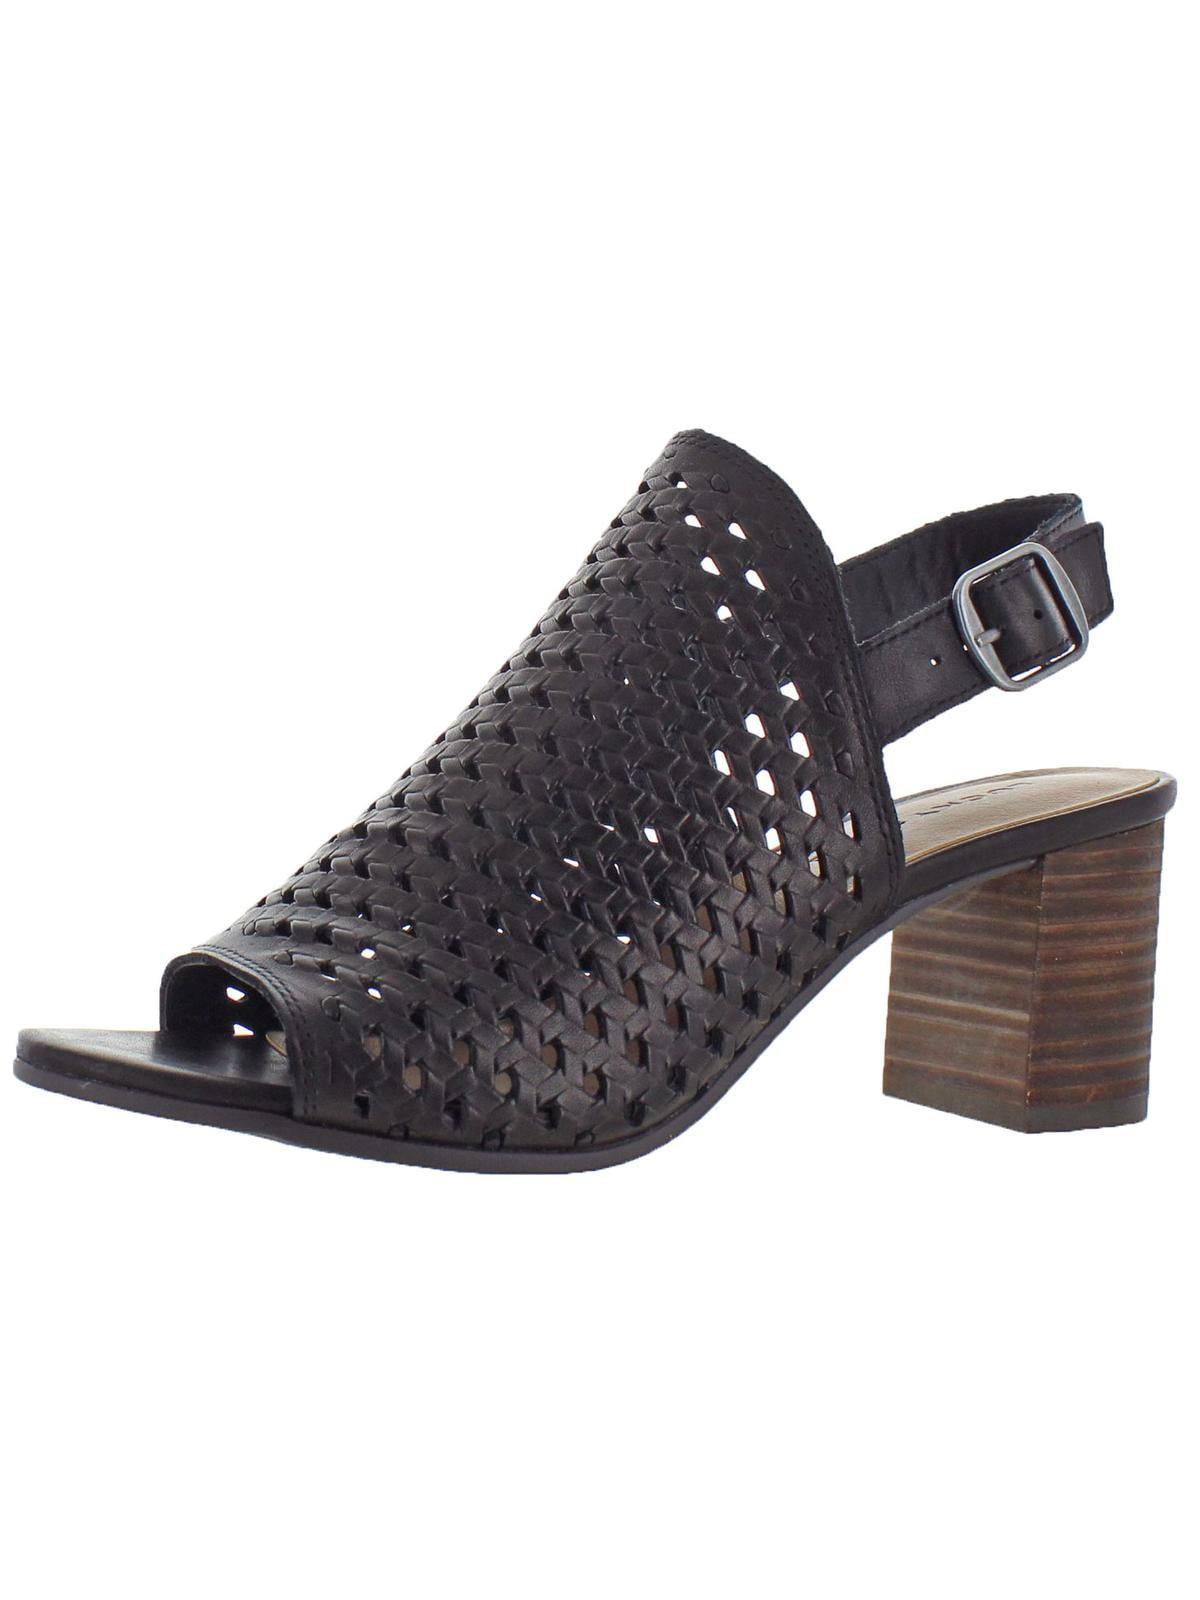 Lucky Brand Womens Verazino Woven Open Toe Slingback Sandals - Walmart.com